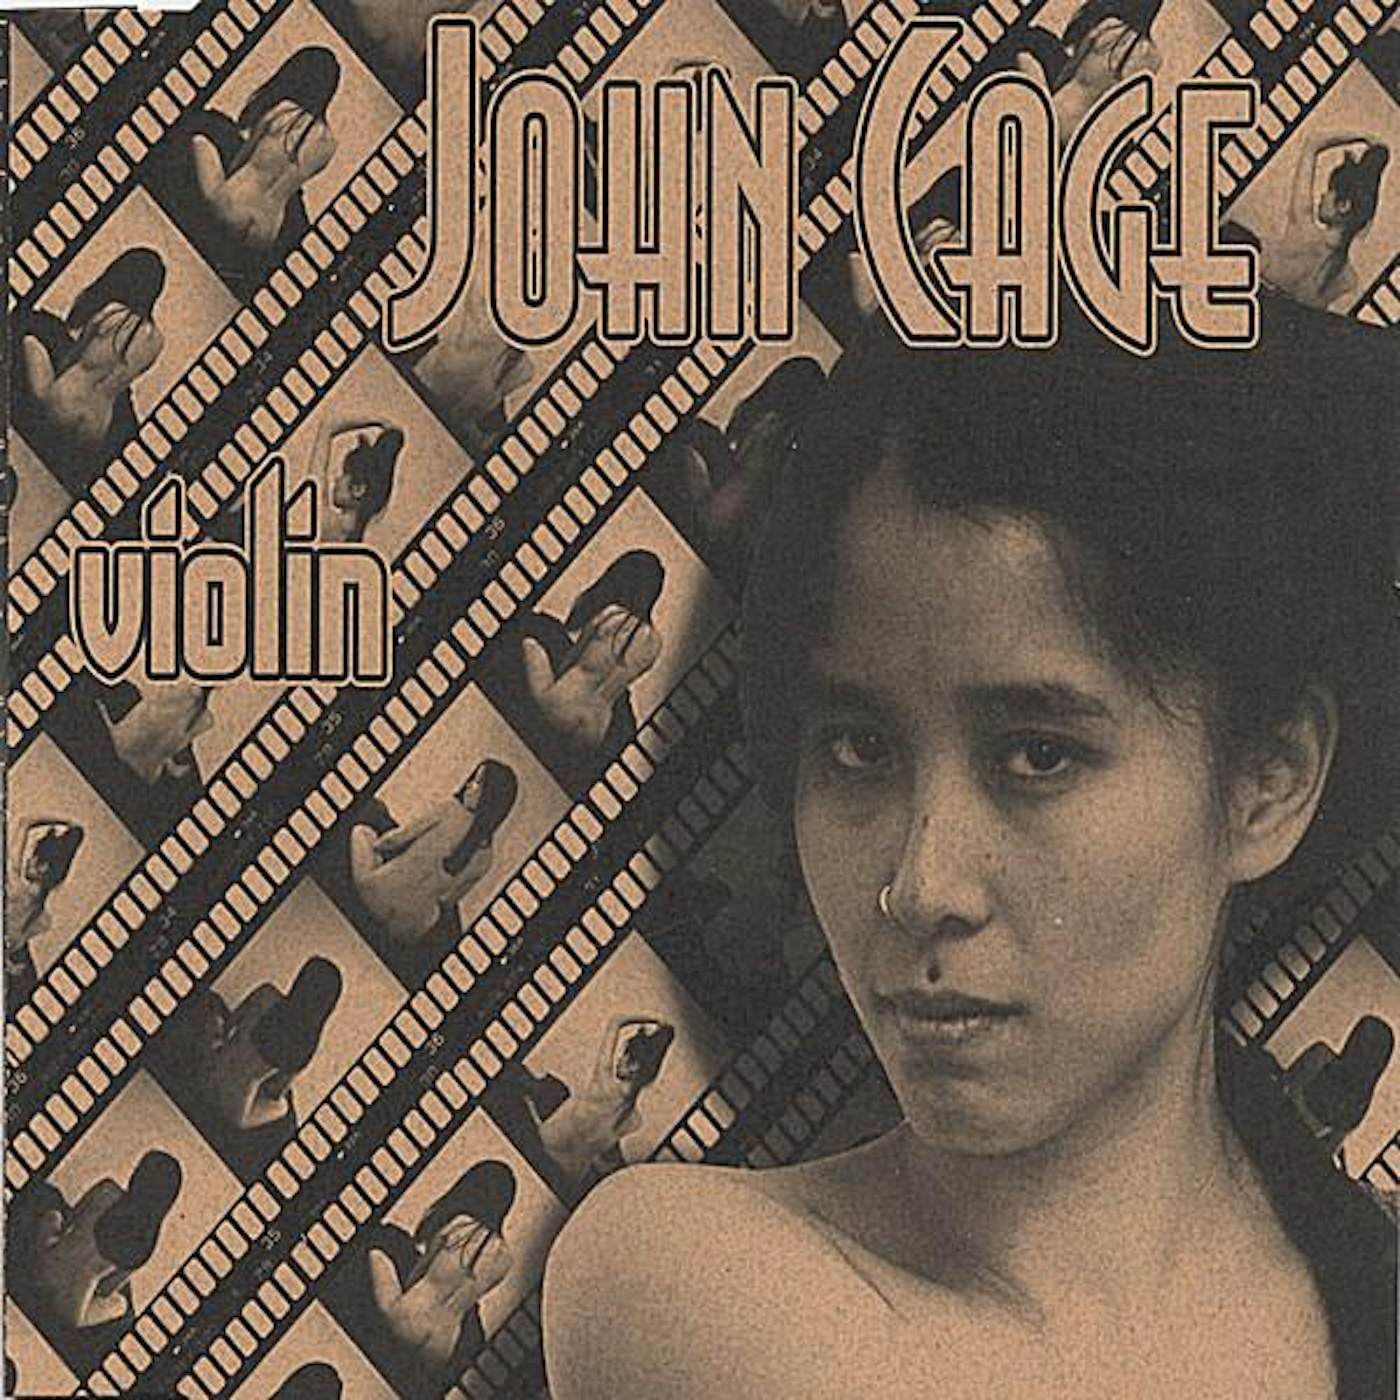 John Cage ONE VIOLIN ONE6 ONE10/CHRISTINA FONG VIOLIN CD